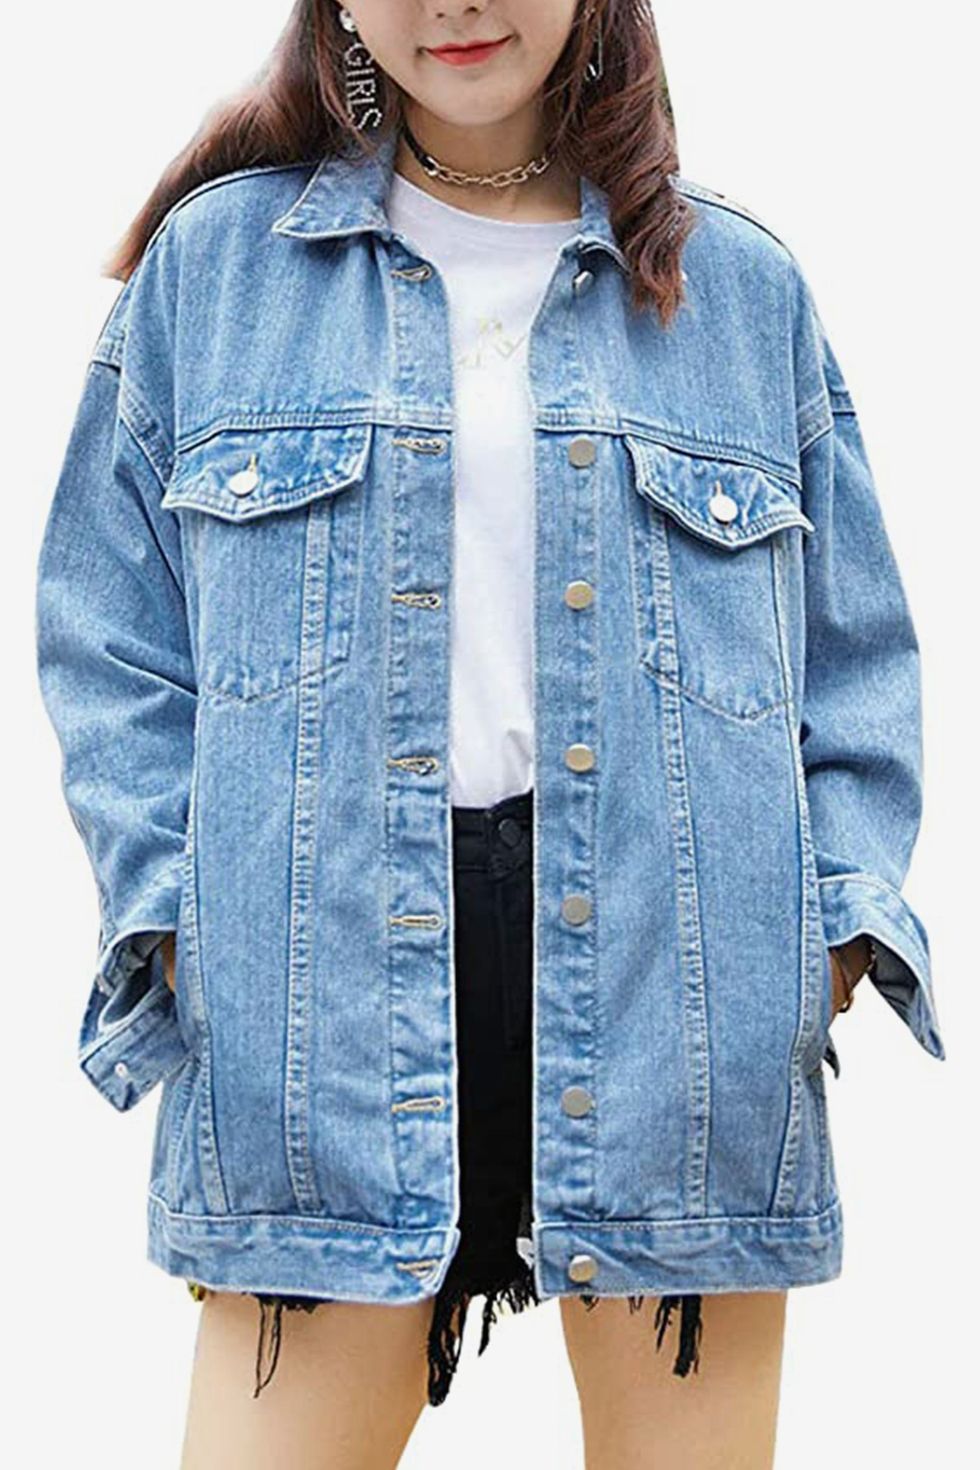 15 Oversized Denim Jackets That Go With Everything – Best Oversized ...